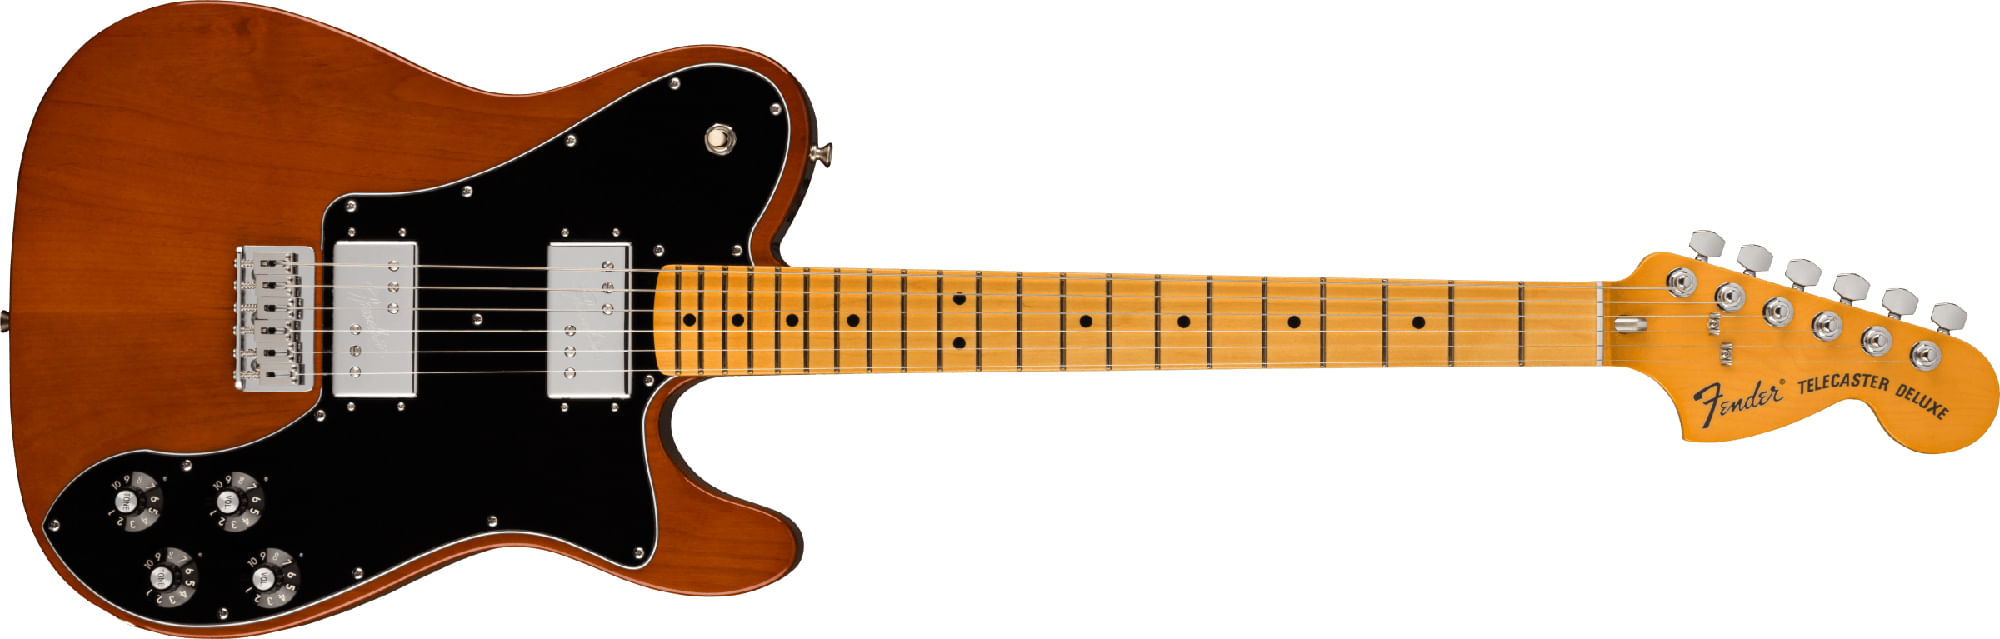 Fender American Vintage II 1975 Telecaster Deluxe - Maple, Mocha